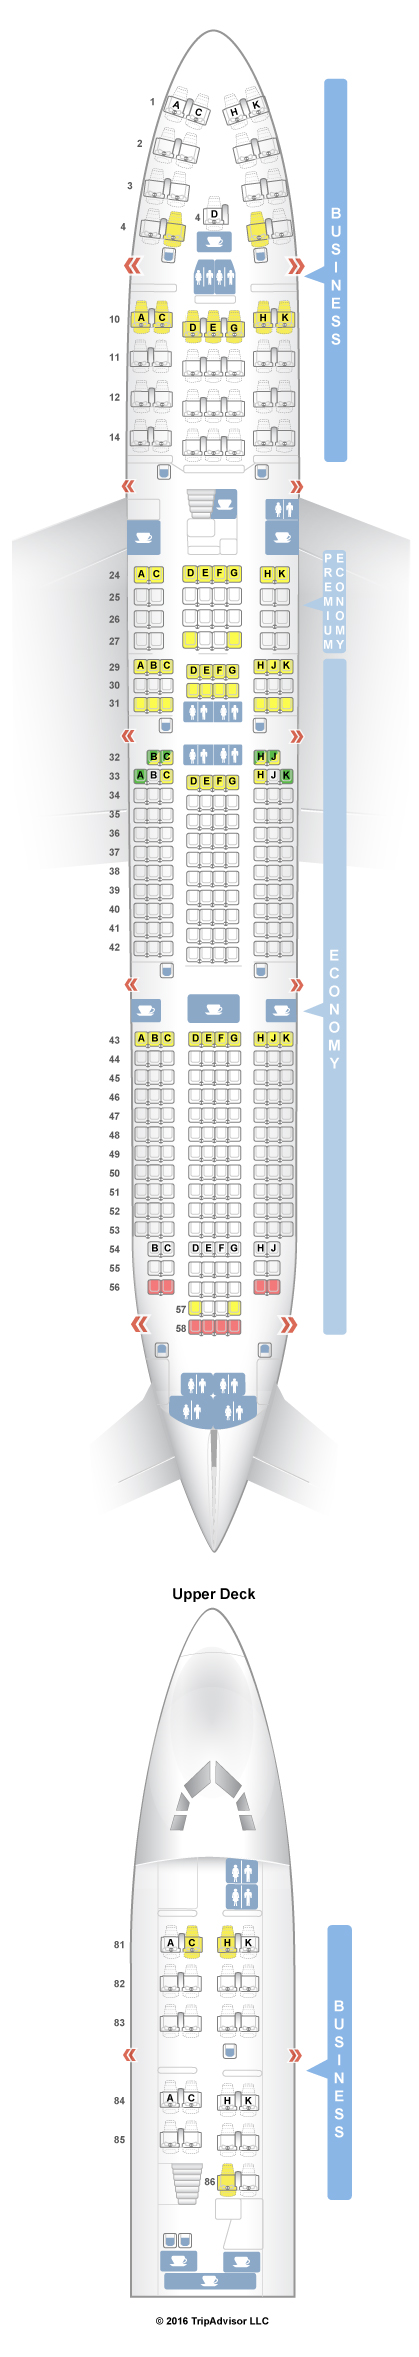 Atlantic Boeing 747 400 Seating Chart